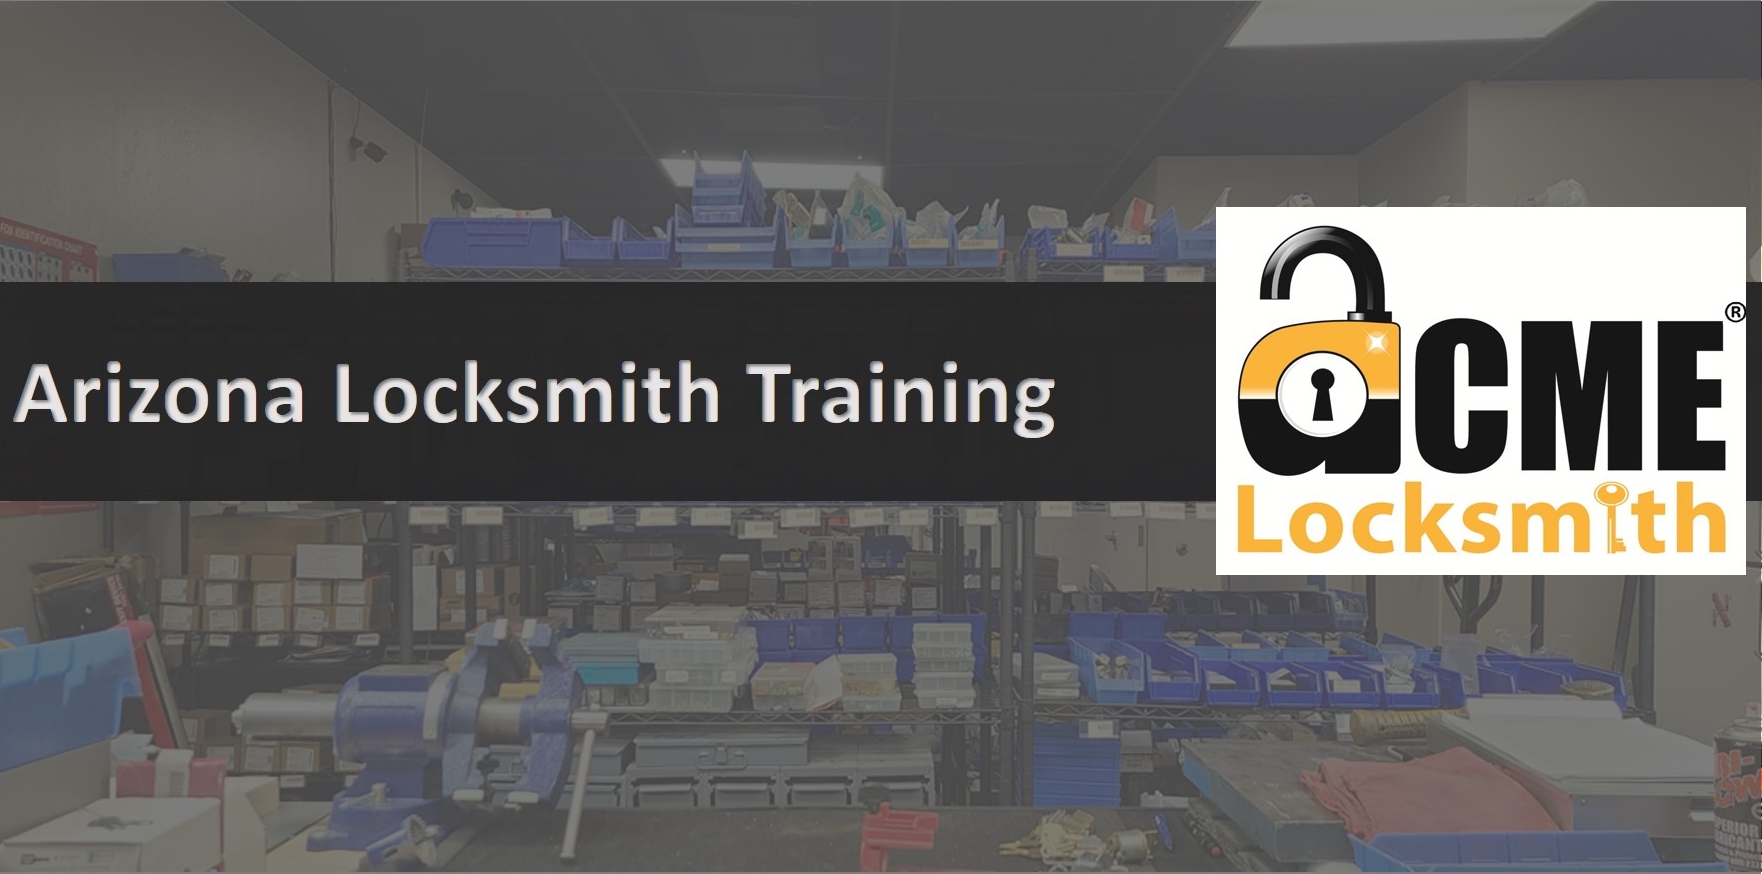 Locksmith Training: Learn to be a Locksmith